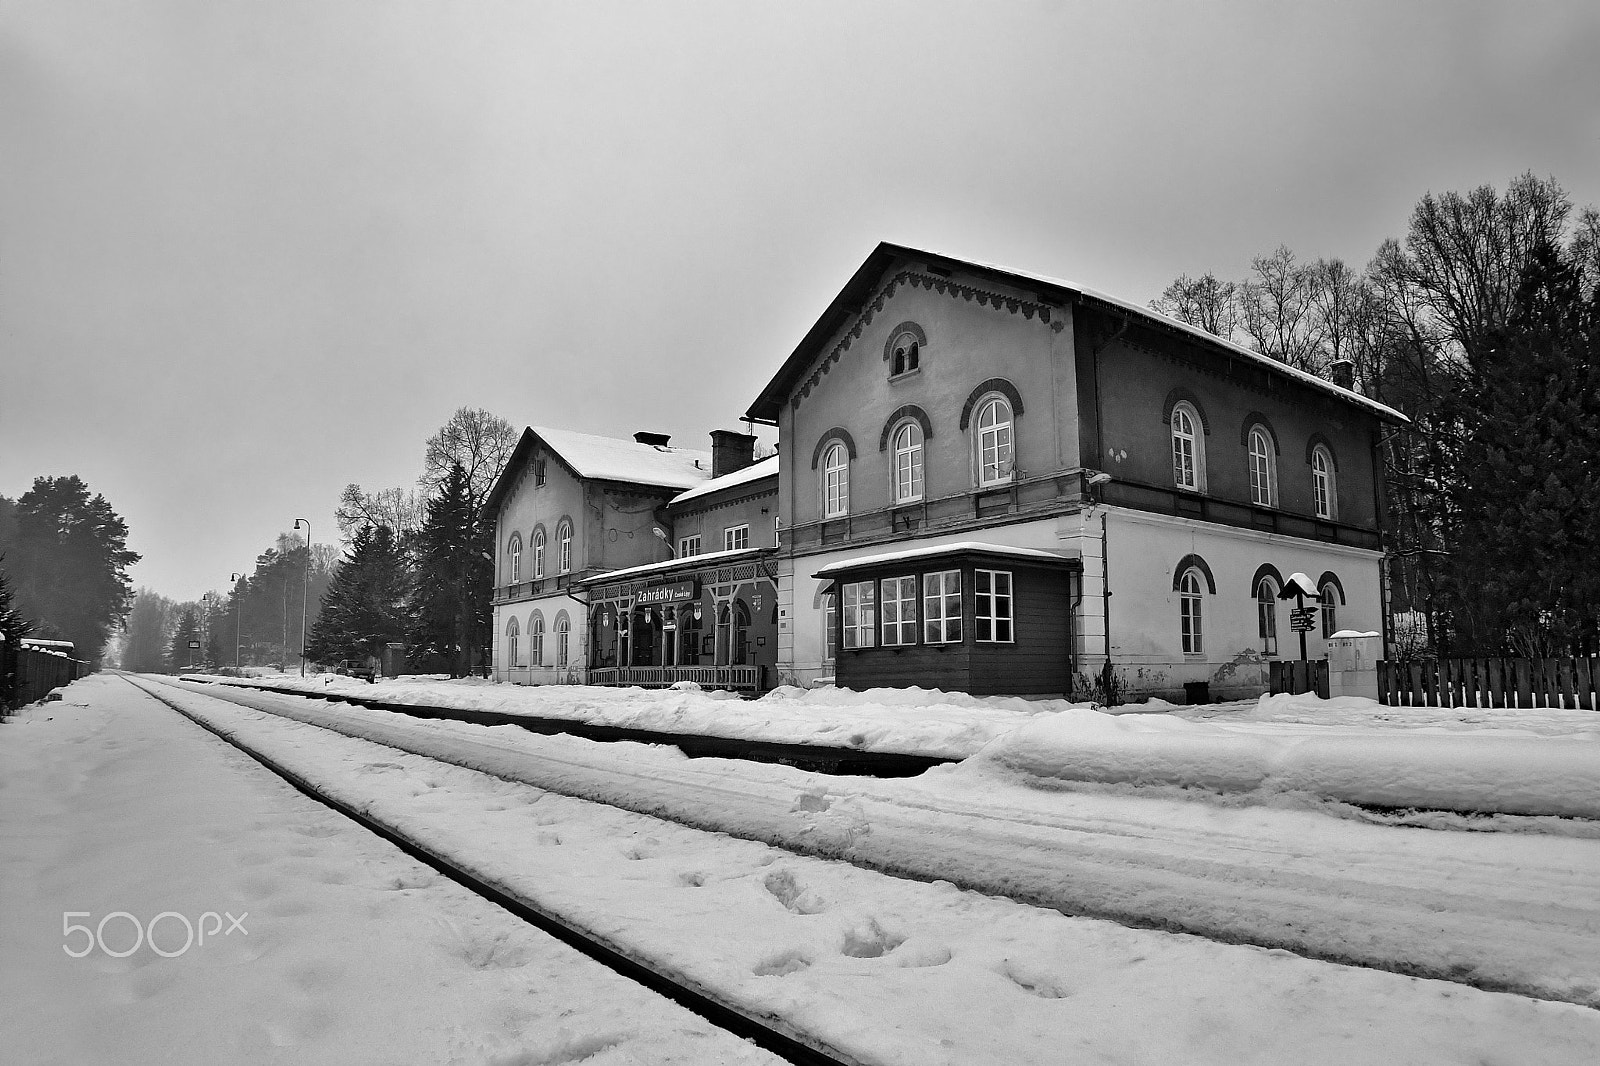 Nikon Coolpix P6000 sample photo. Zahradky, machuv kraj, czech republic - february 04, 2017: historical building of the railway... photography